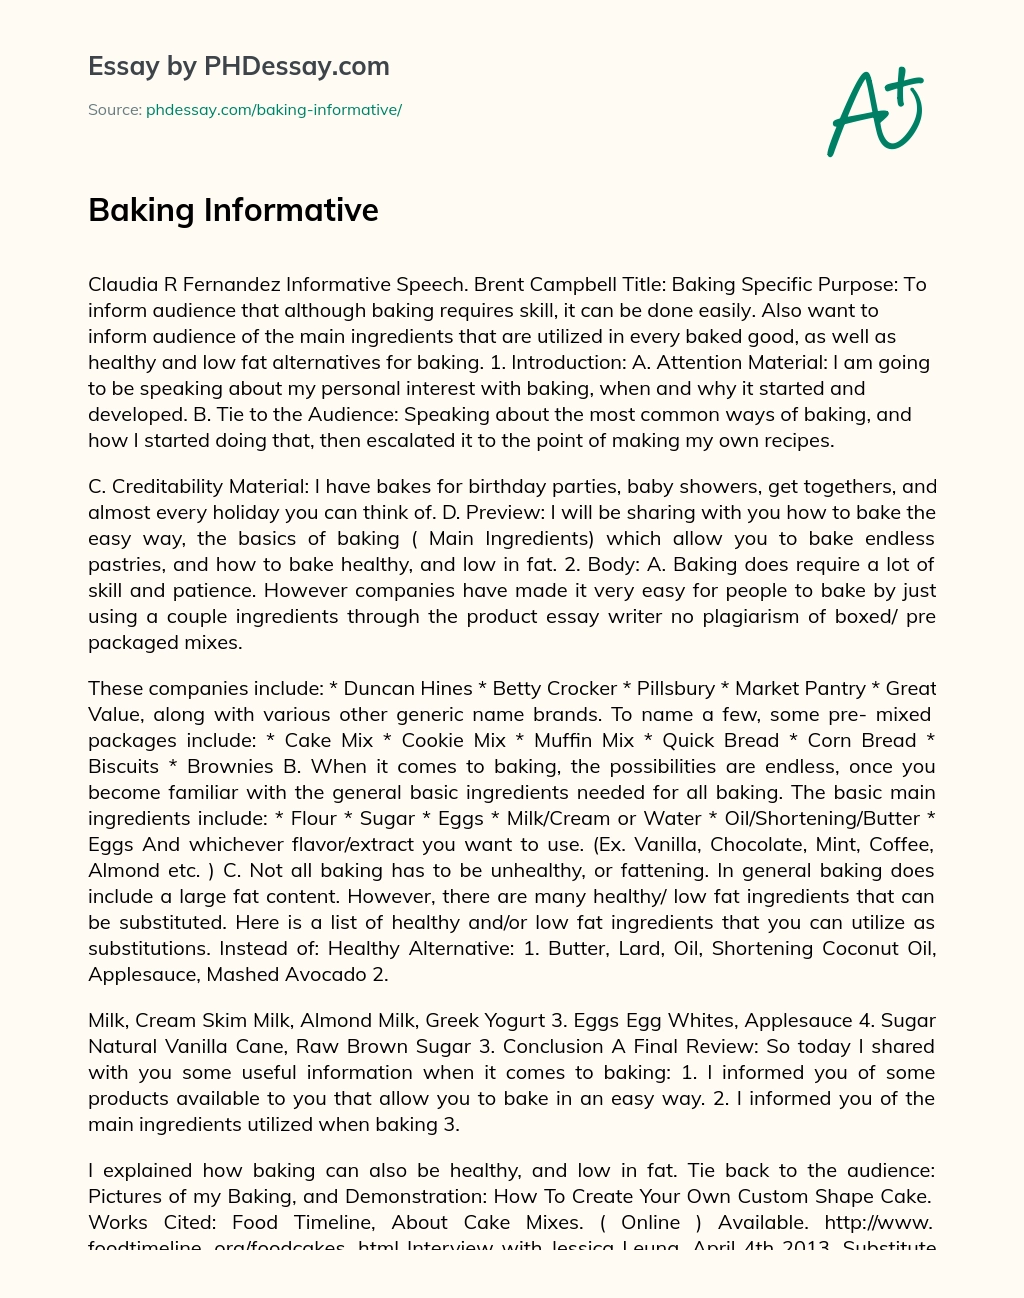 Baking Informative essay